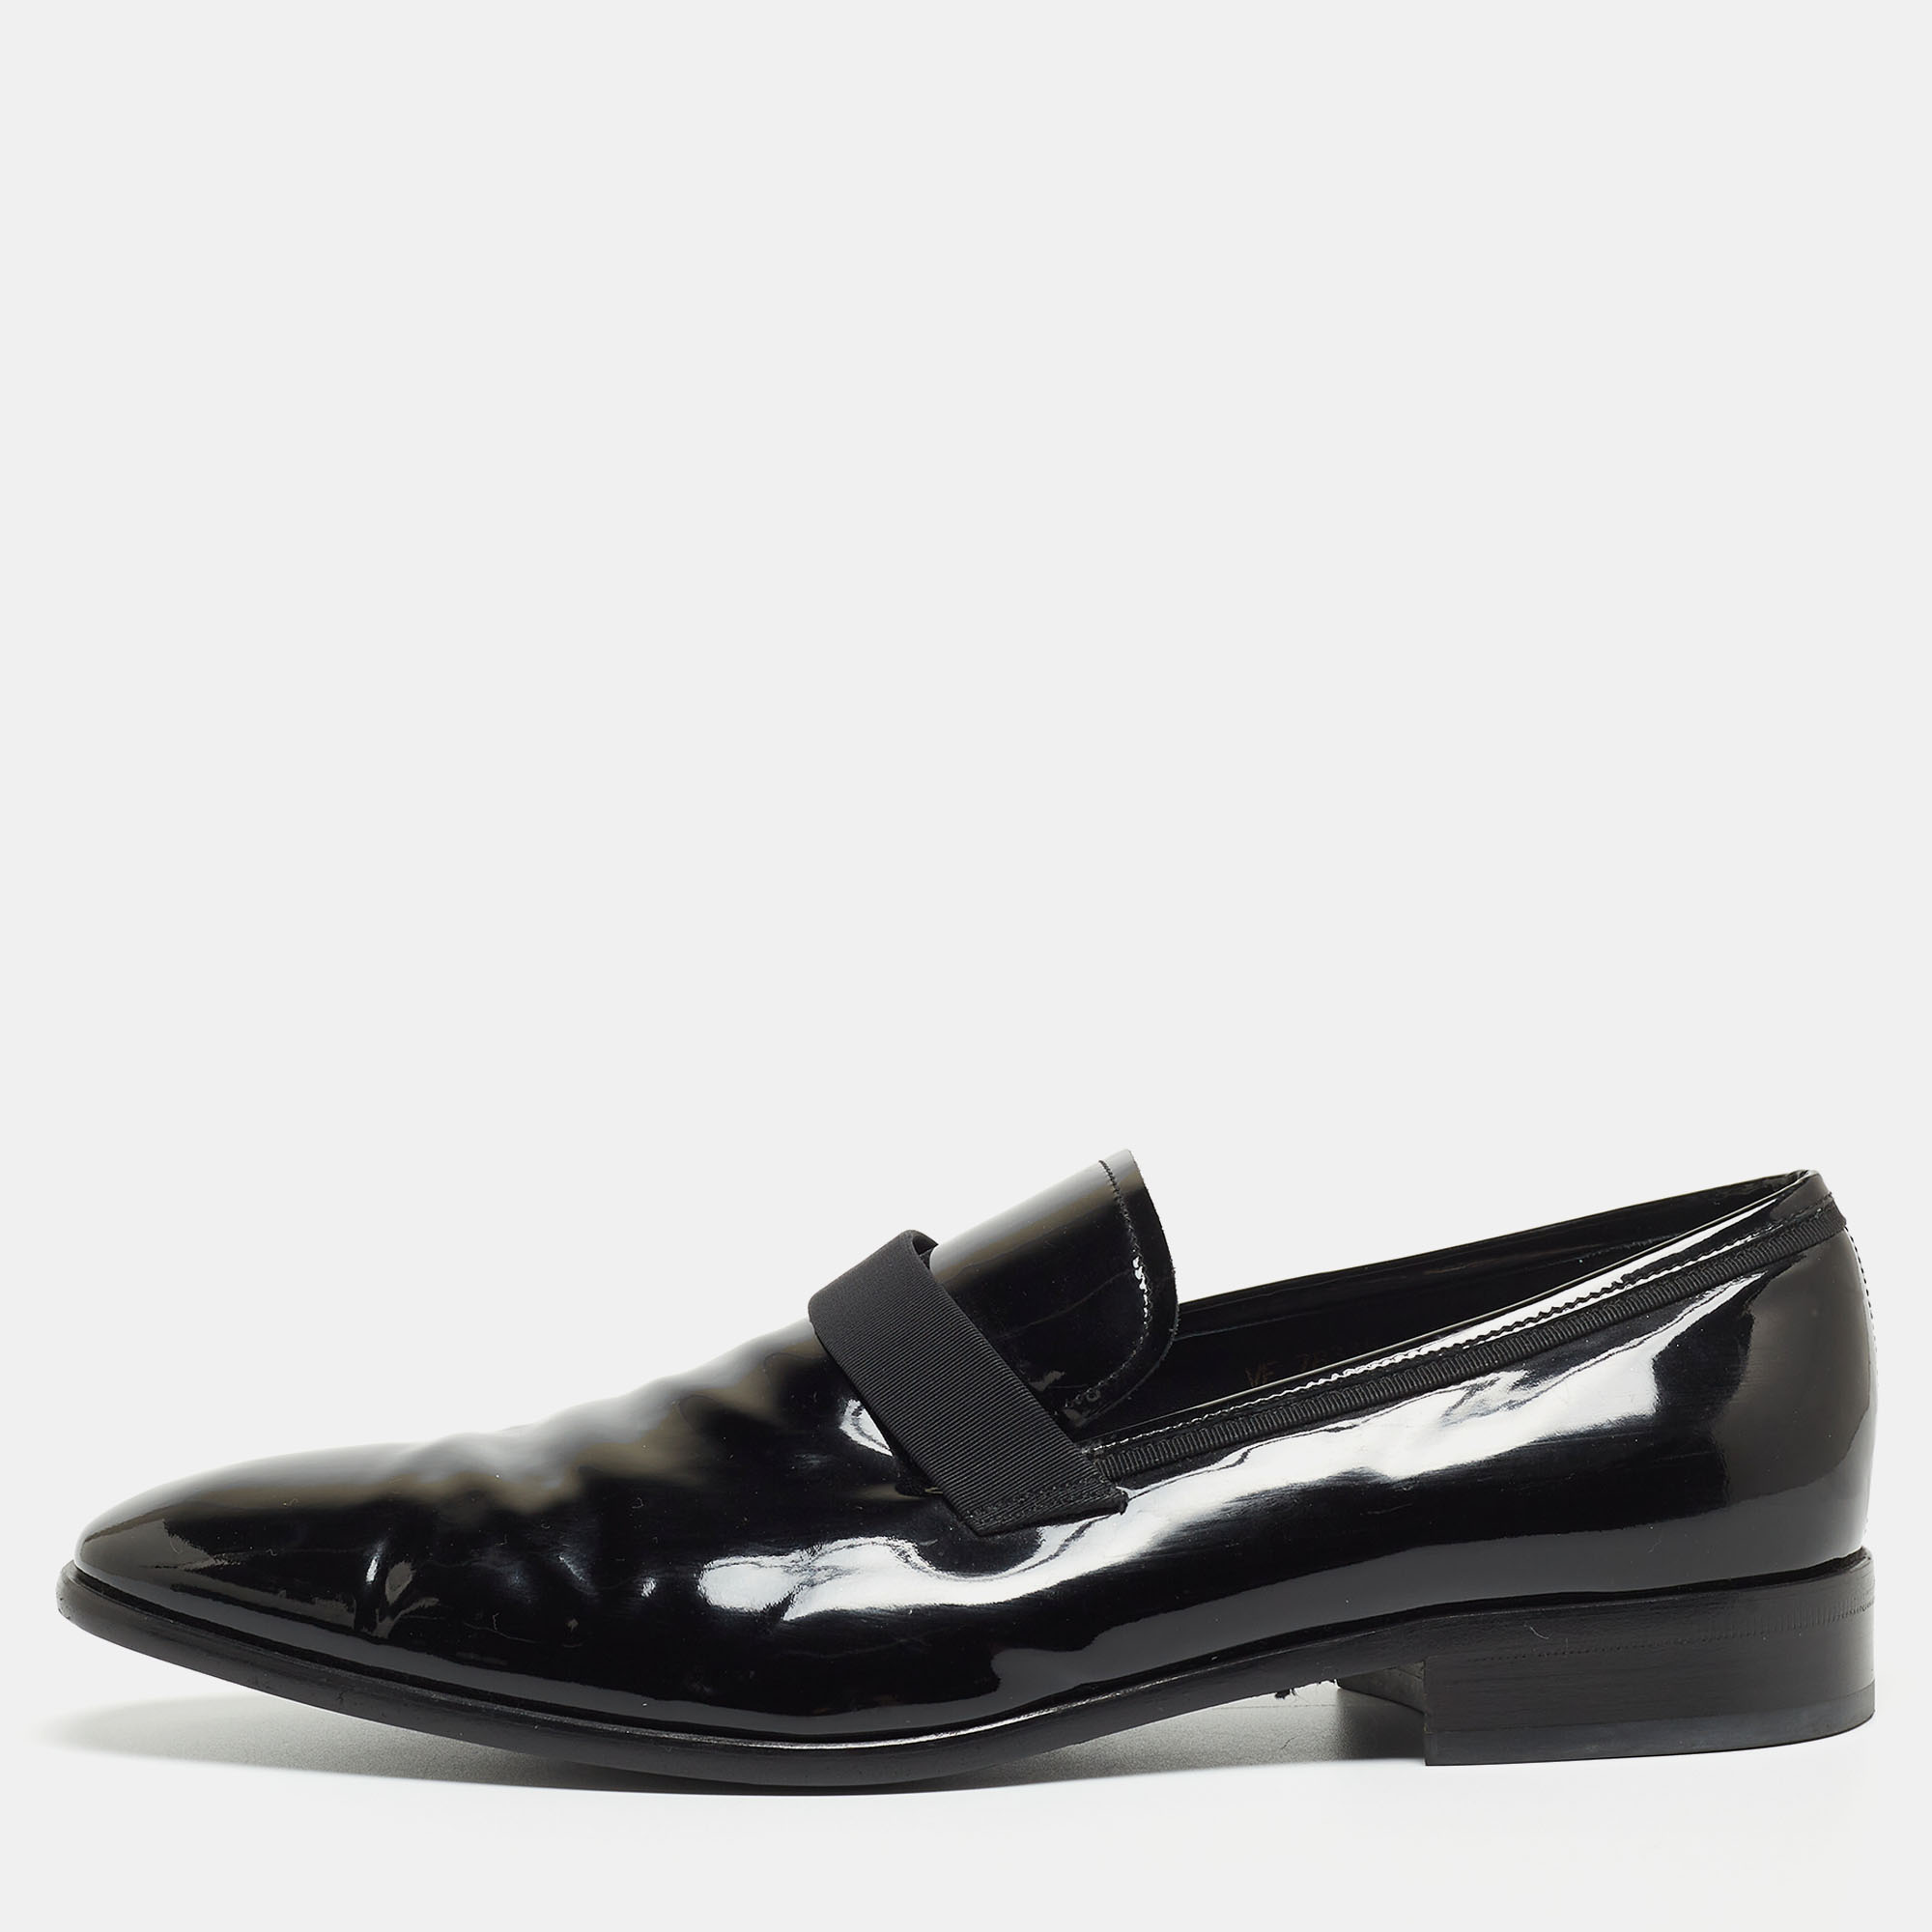 Pre-owned Ferragamo Black Patent Leather Antoane Loafers Size 46